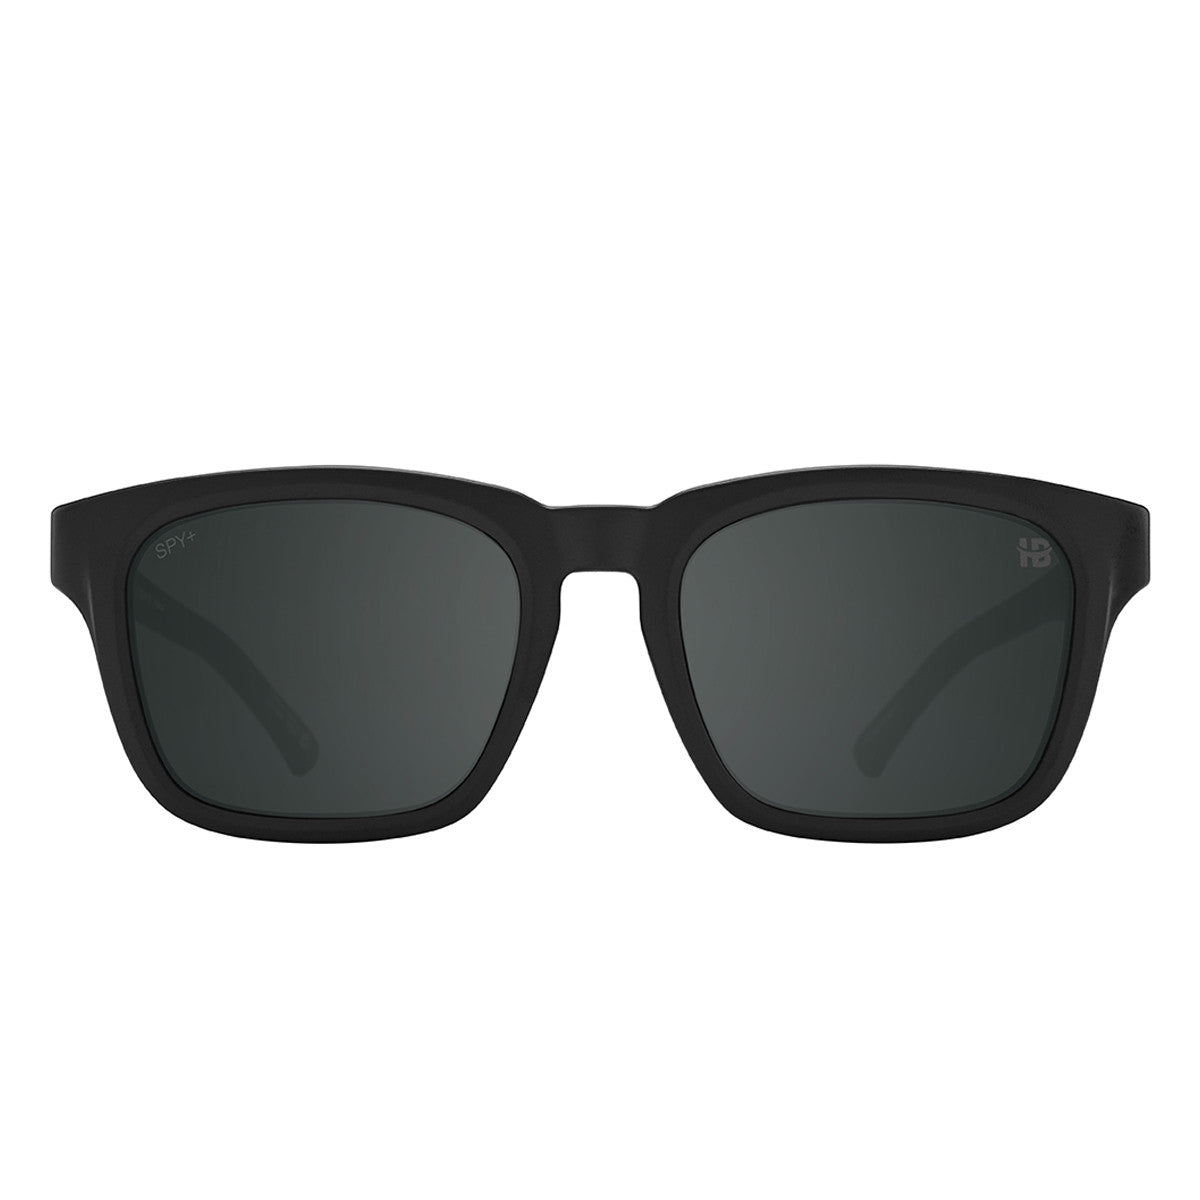 Sunglasses - Spy Optic - Saxony - Matte Black